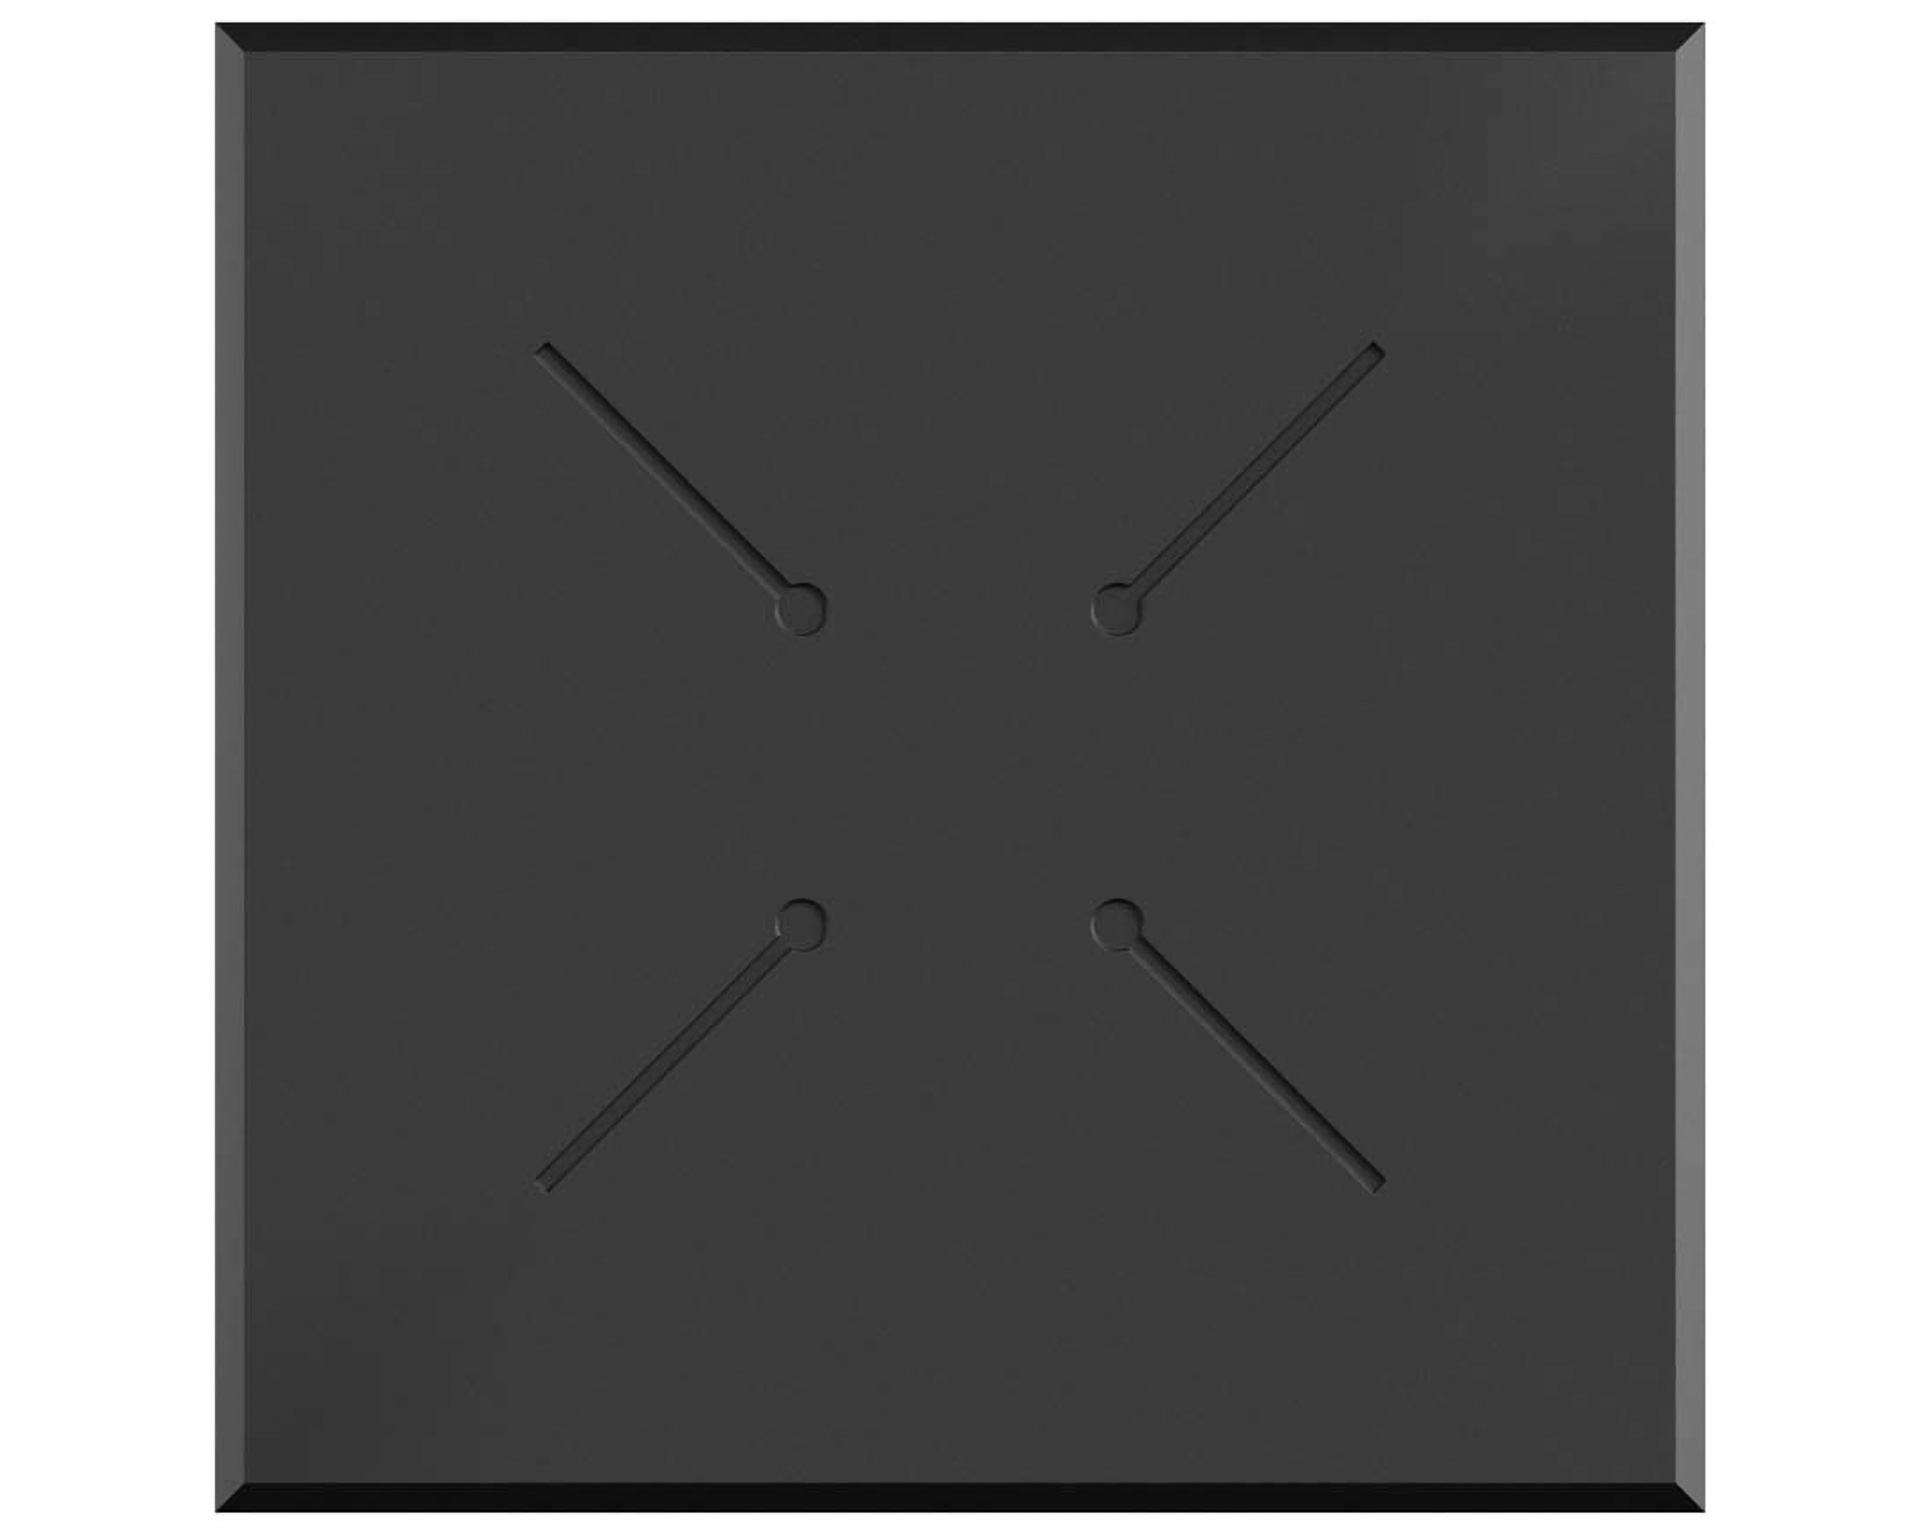 X Cross terrastafel zwart frame + Tropical Wood HPL tafelblad tafelblad 70x70cm